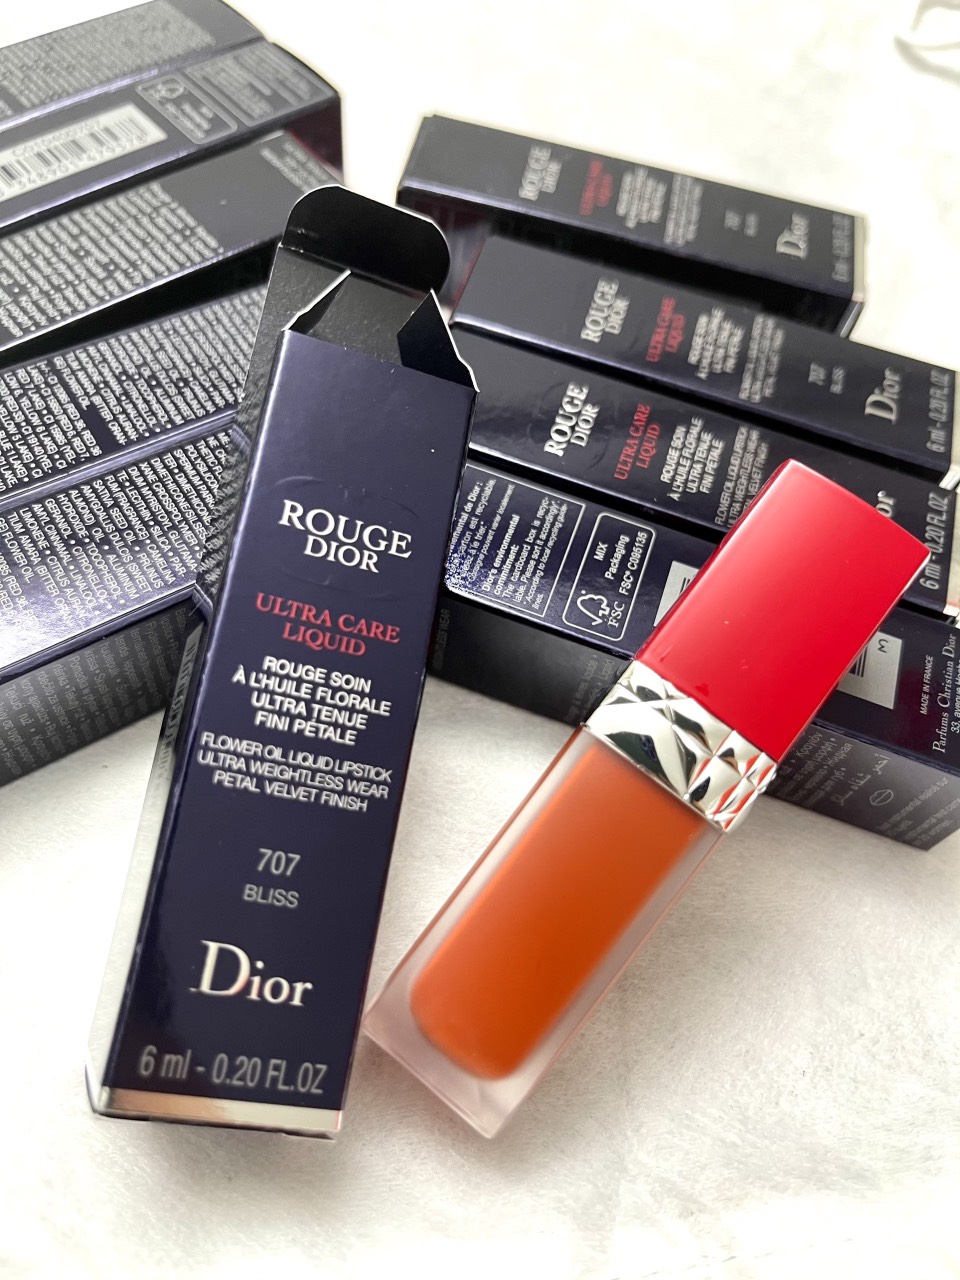 Son Kem Dior Rouge Dior Ultra Care Liquid 446 Whisper Màu Cam Nude  TIẾN  THÀNH BEAUTY